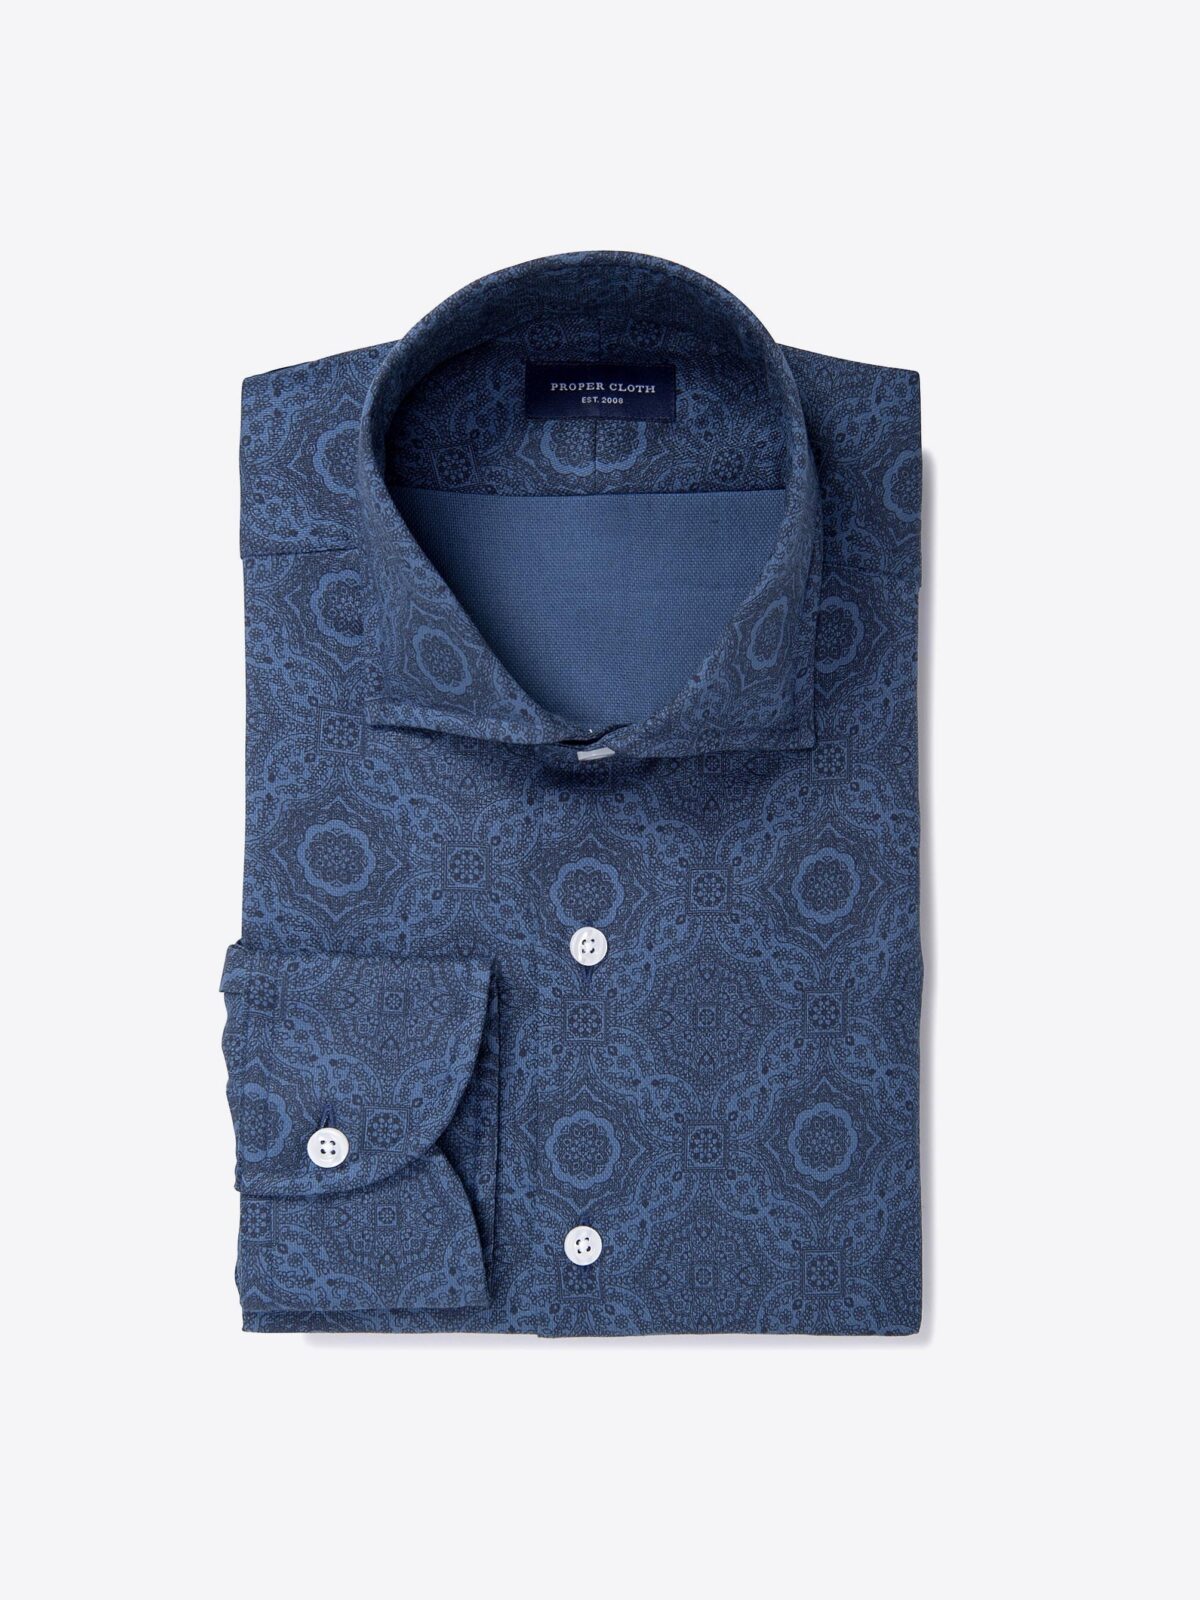 Proper Cloth button up dress shirt - custom fit